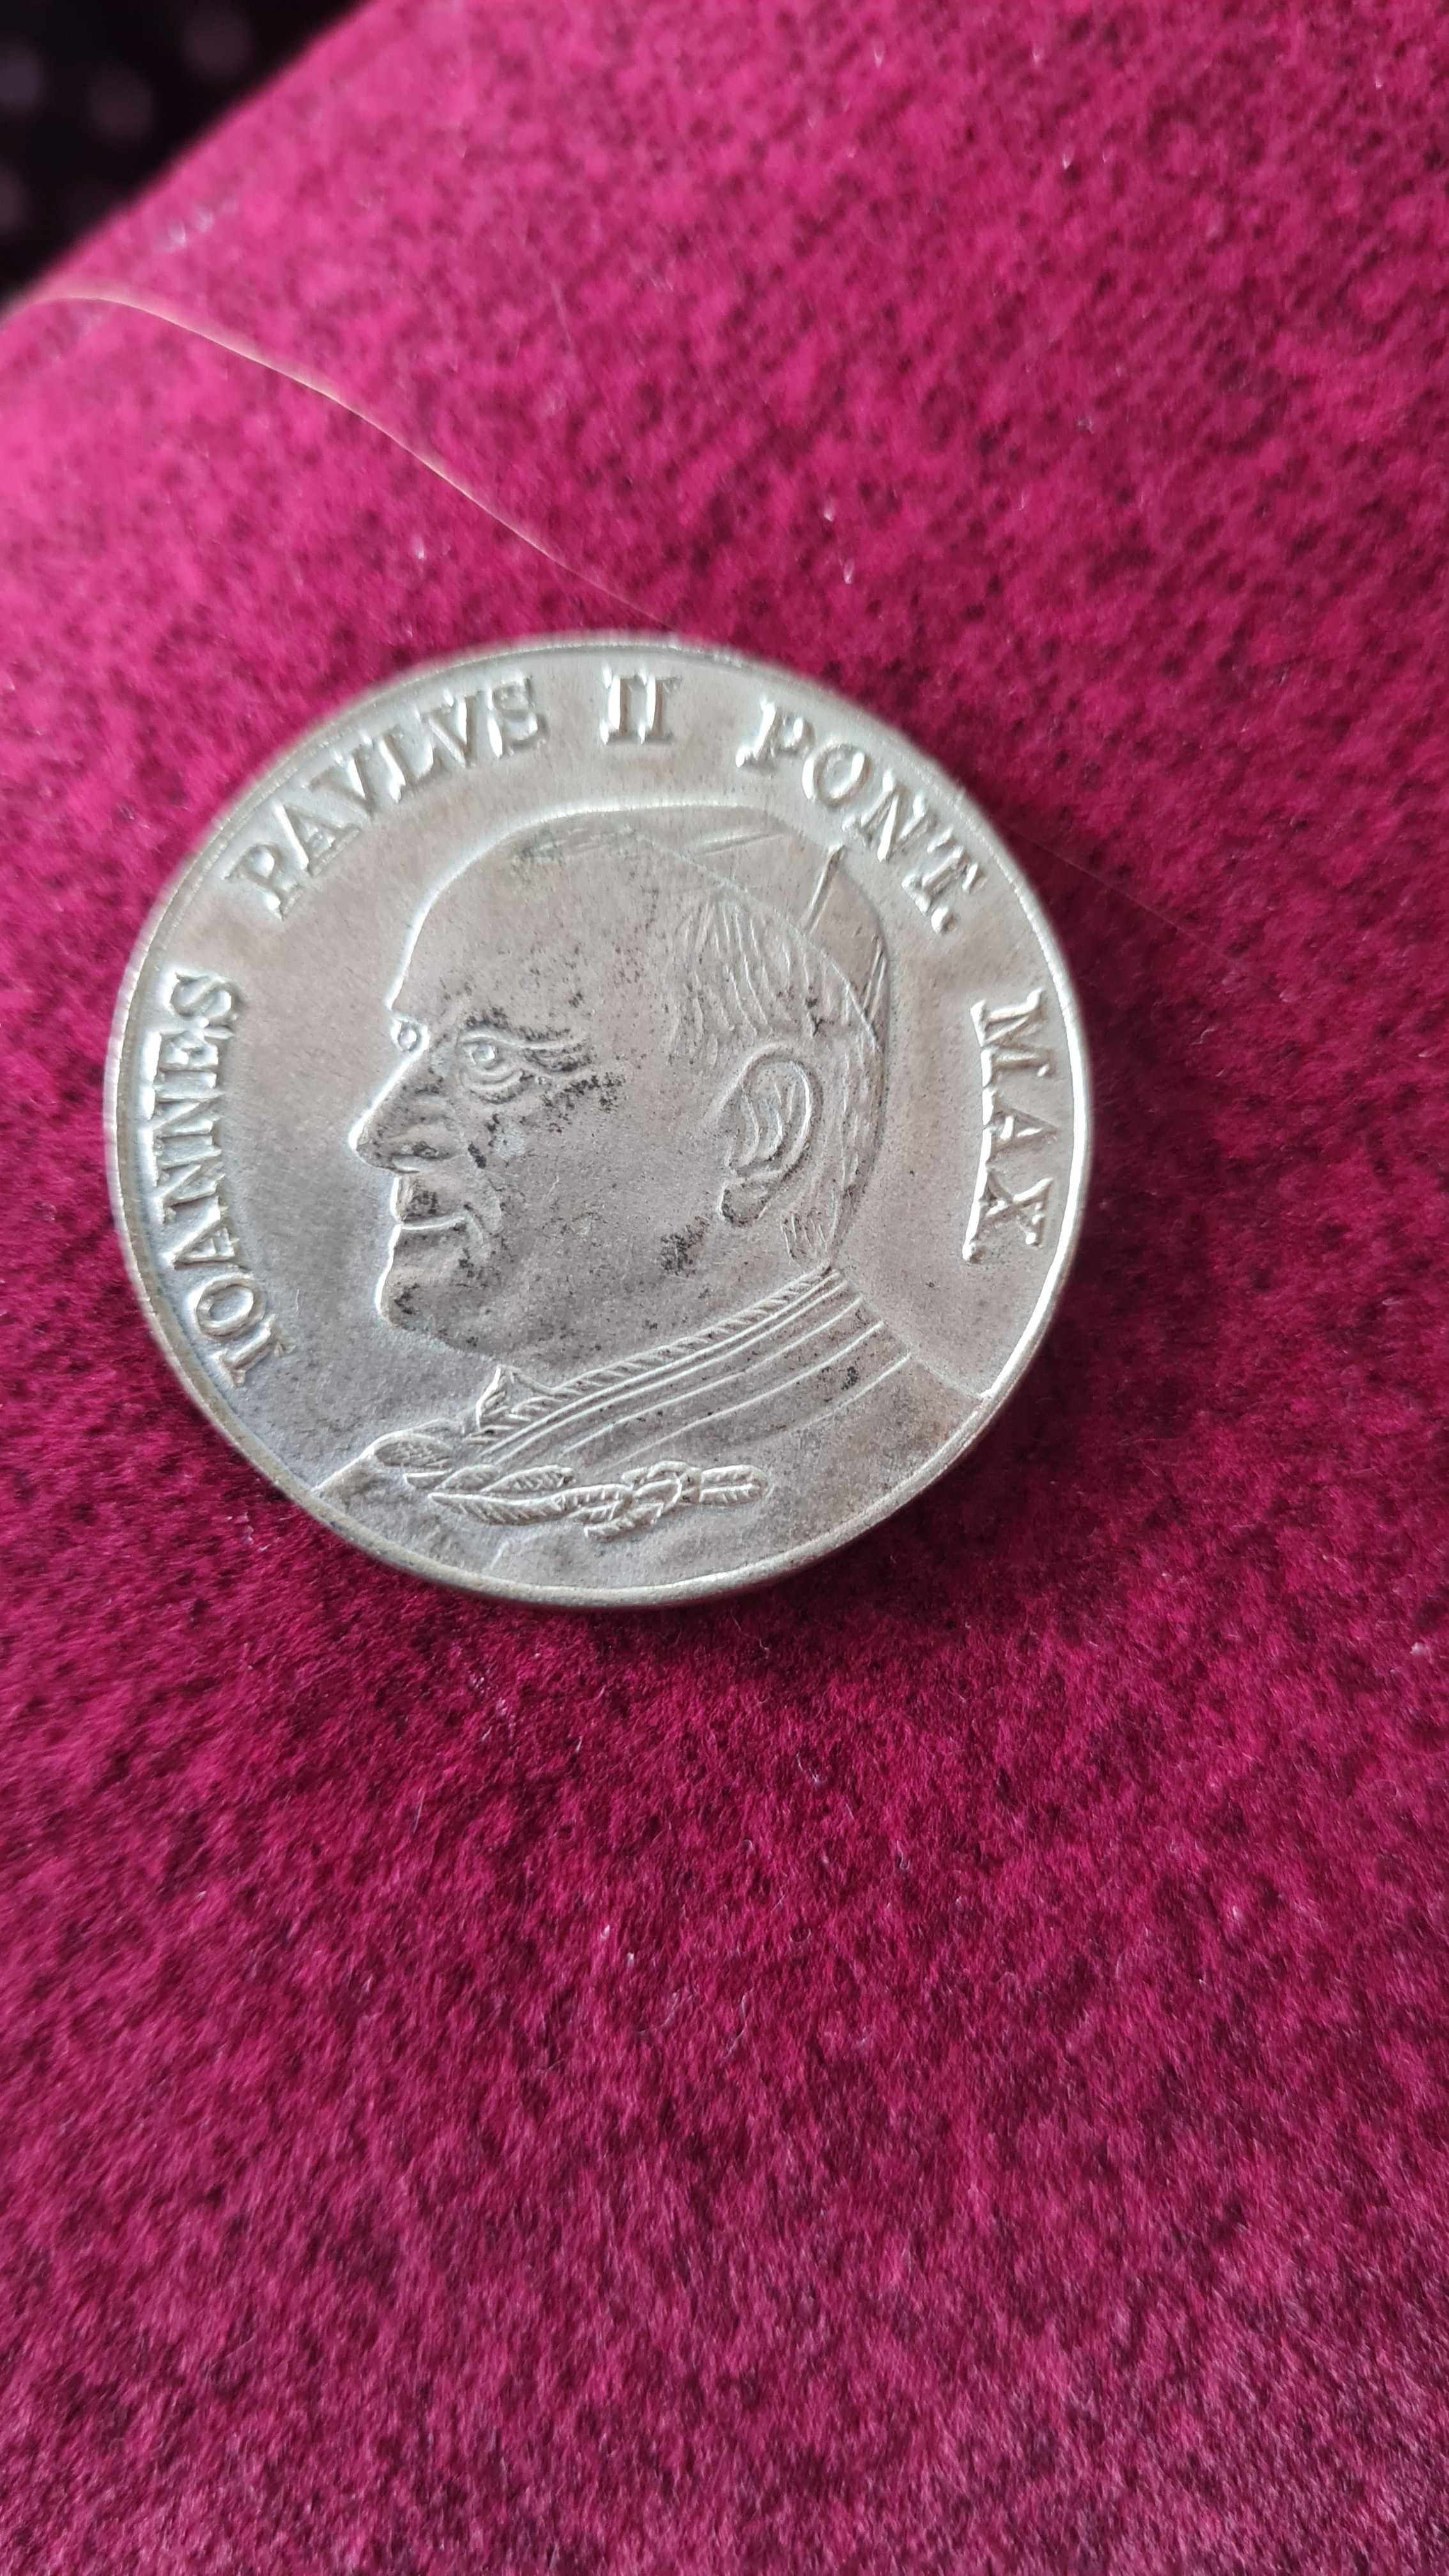 Medal Jan Paweł II La Pieta